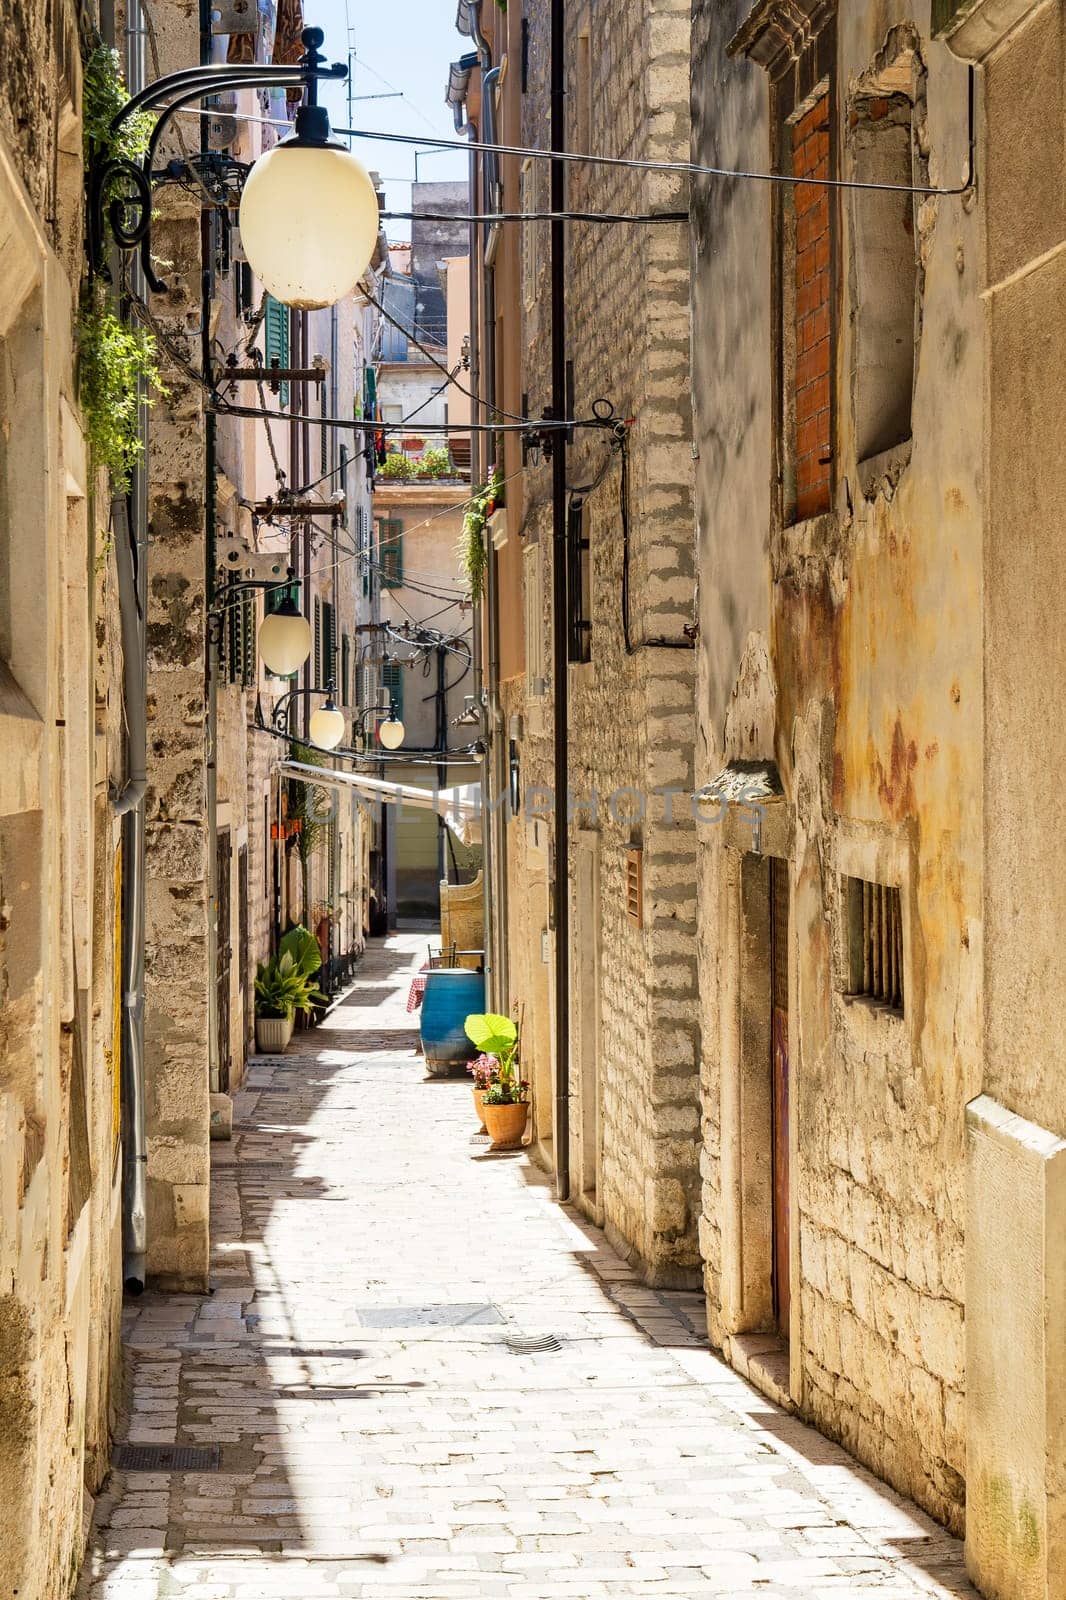 Small narrow street in the old town of sibenik in croatia. Sibenik Tourist city by the Adratic sea by PhotoTime